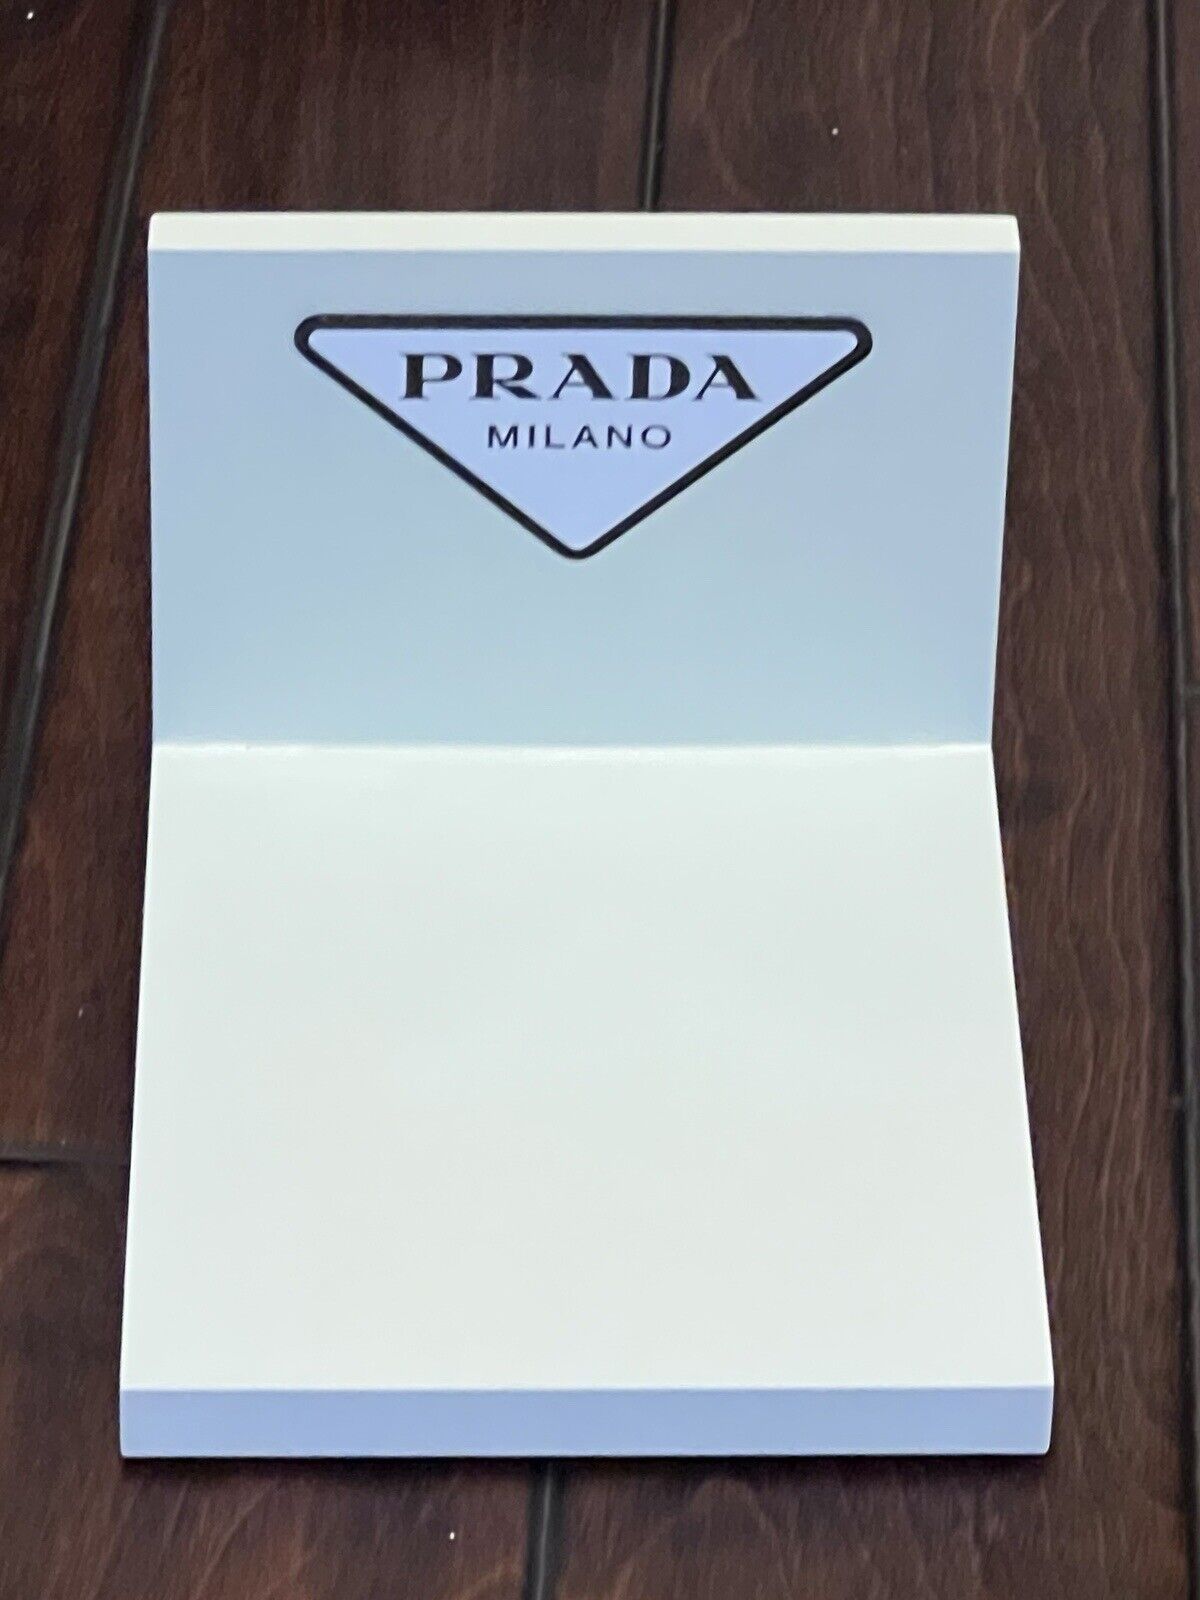 PRADA “L-Shaped” Counter Display Magnetic Logo-BRAND NEW-Retail Branded Display